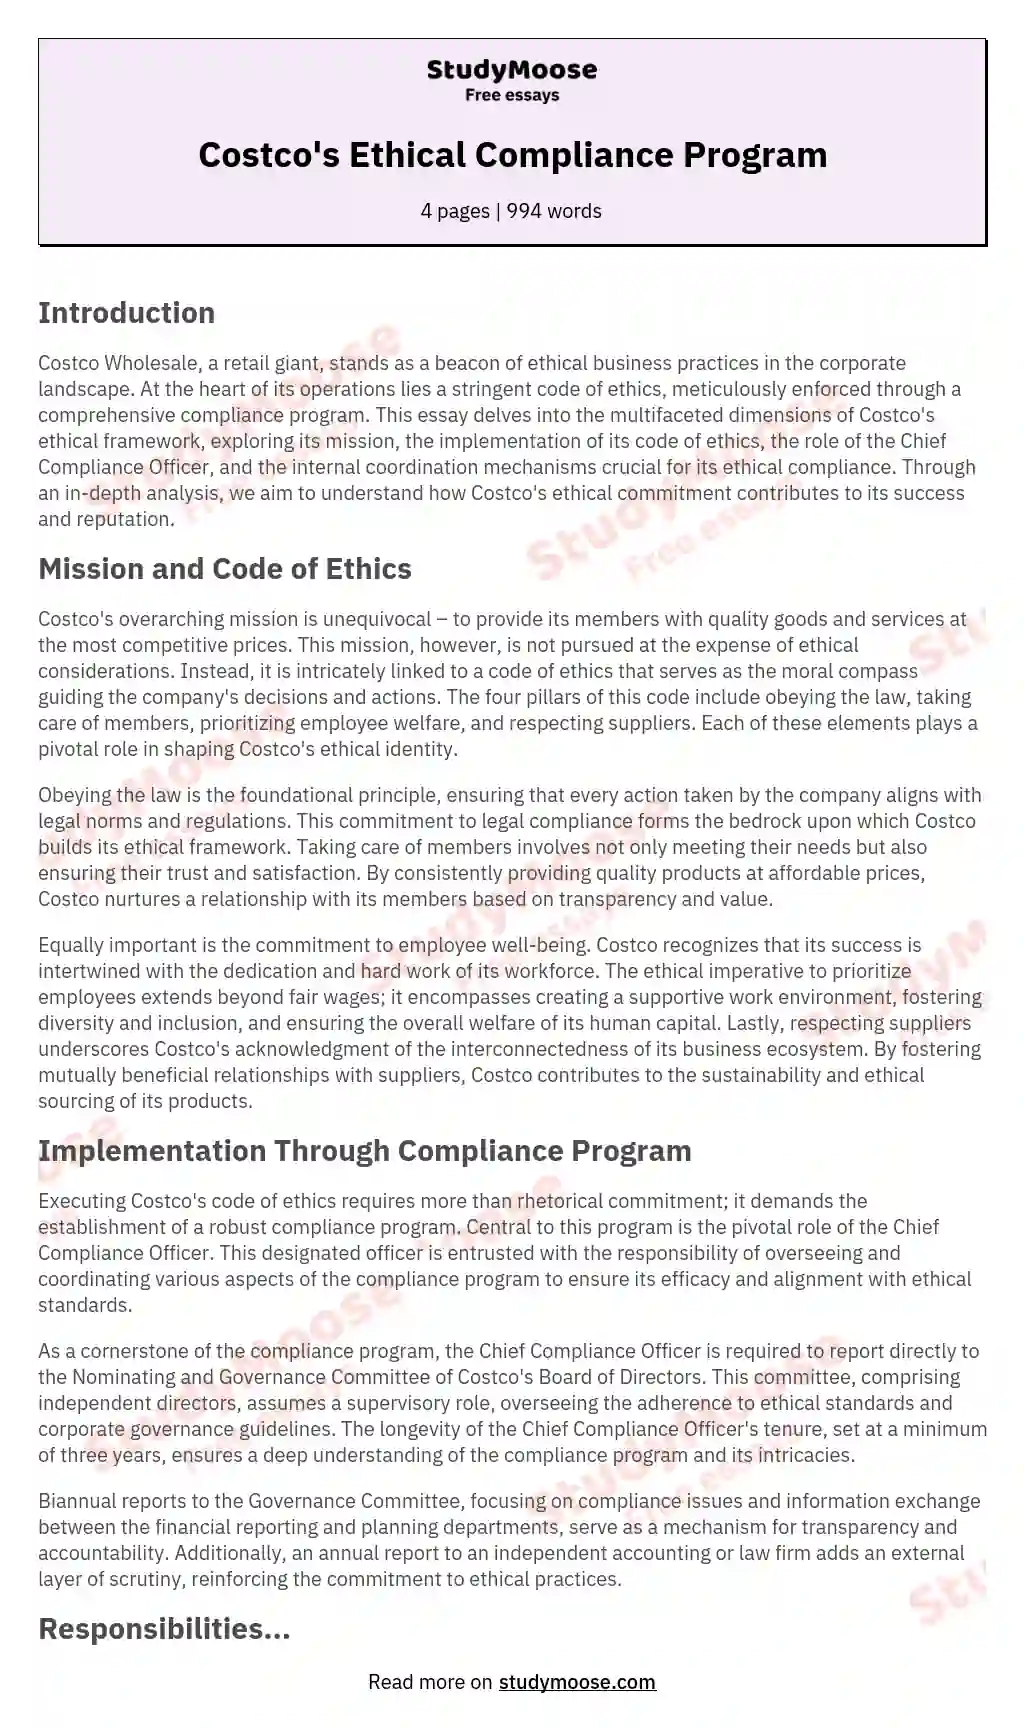 Costco's Ethical Compliance Program essay